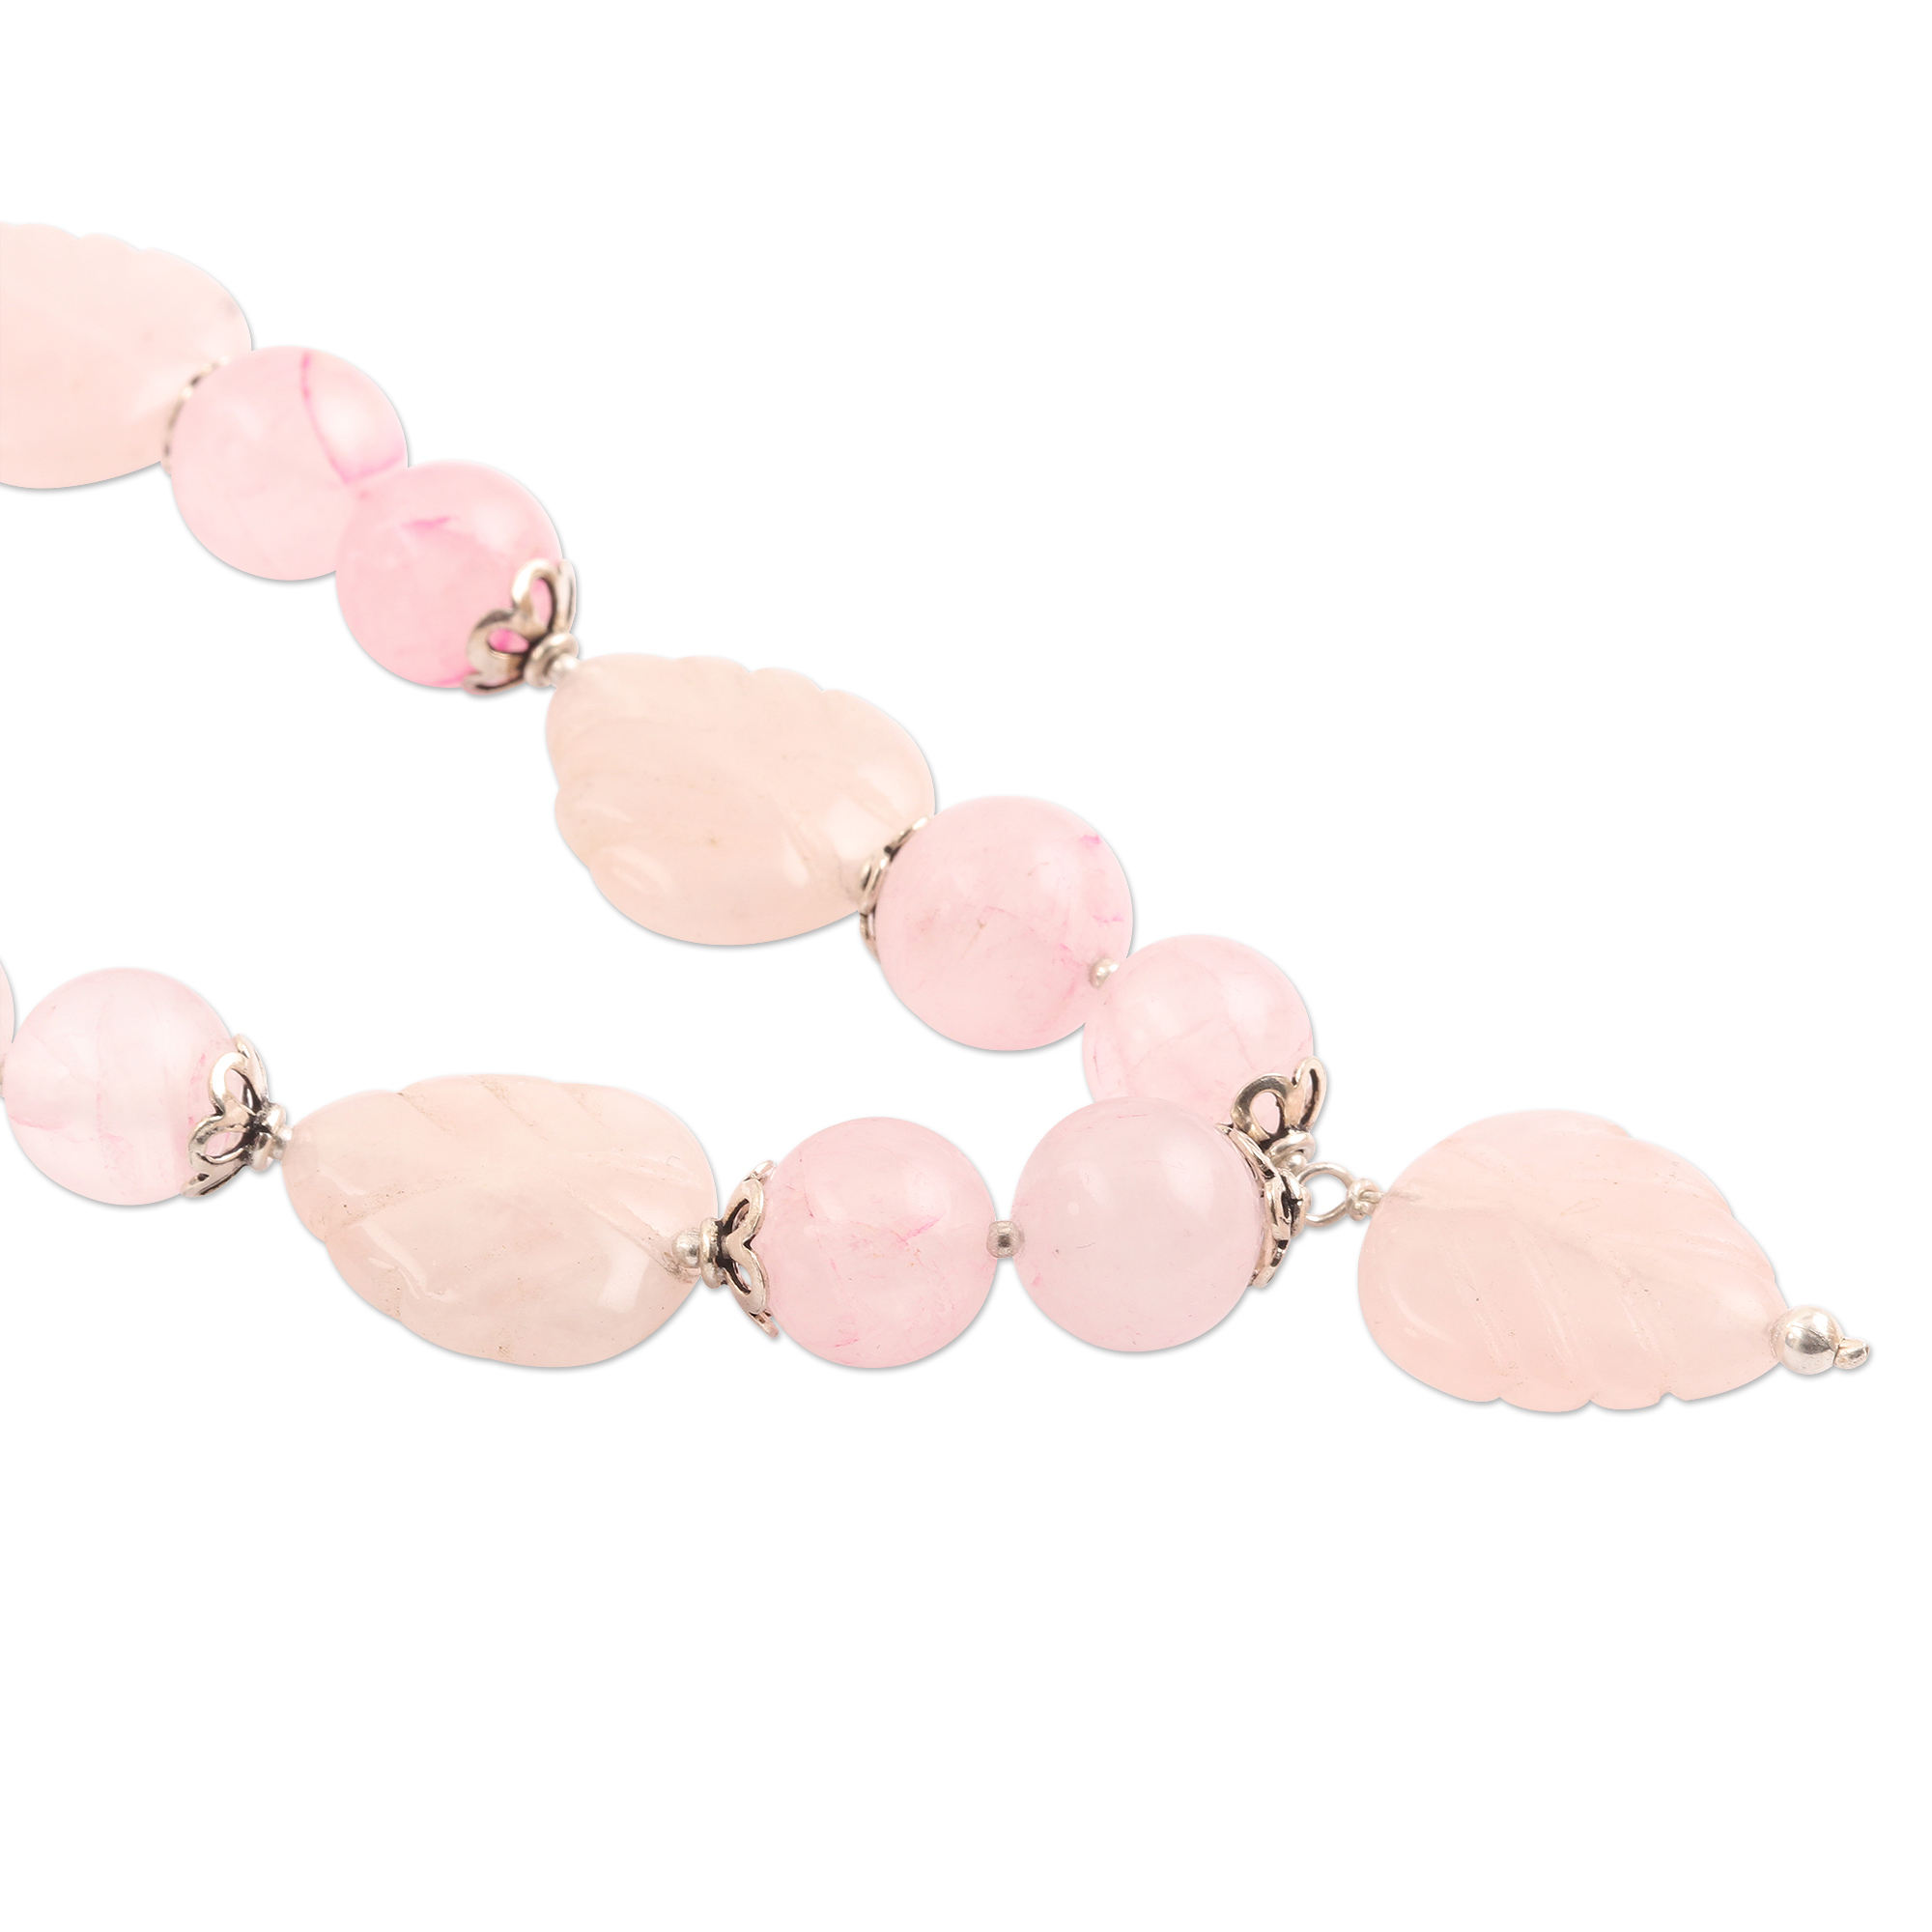 rose quartz beads necklace